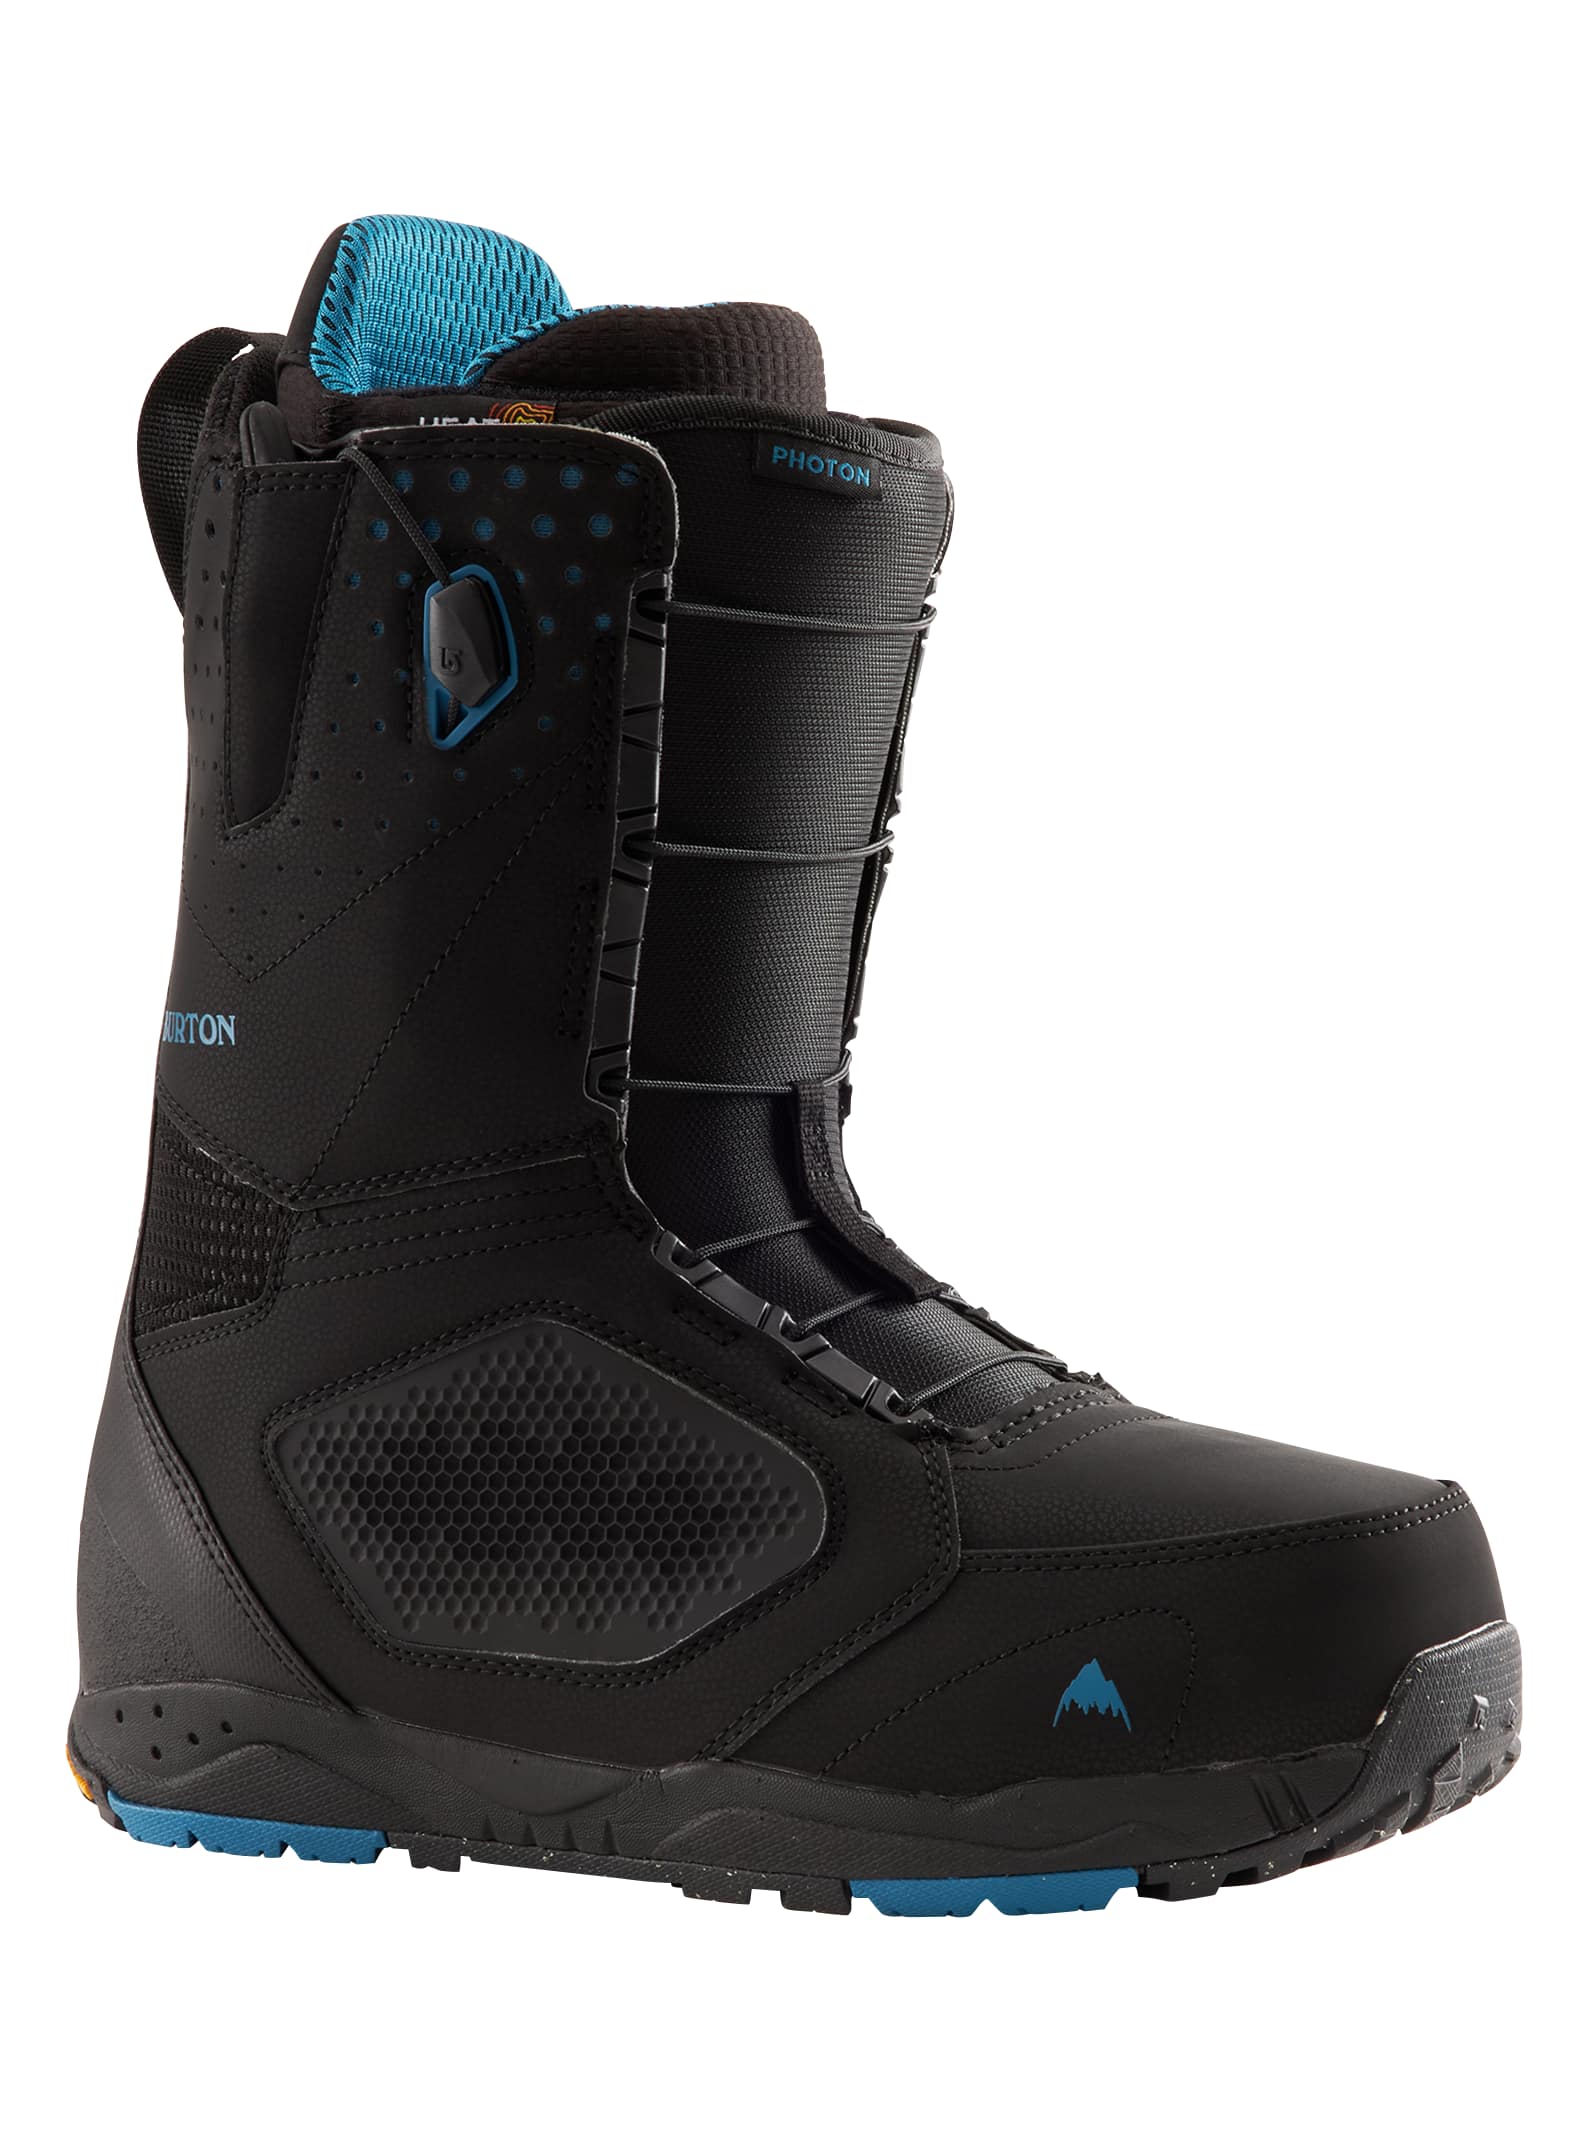 Men's Burton Photon Snowboard Boots | Burton.com Winter 2022 US